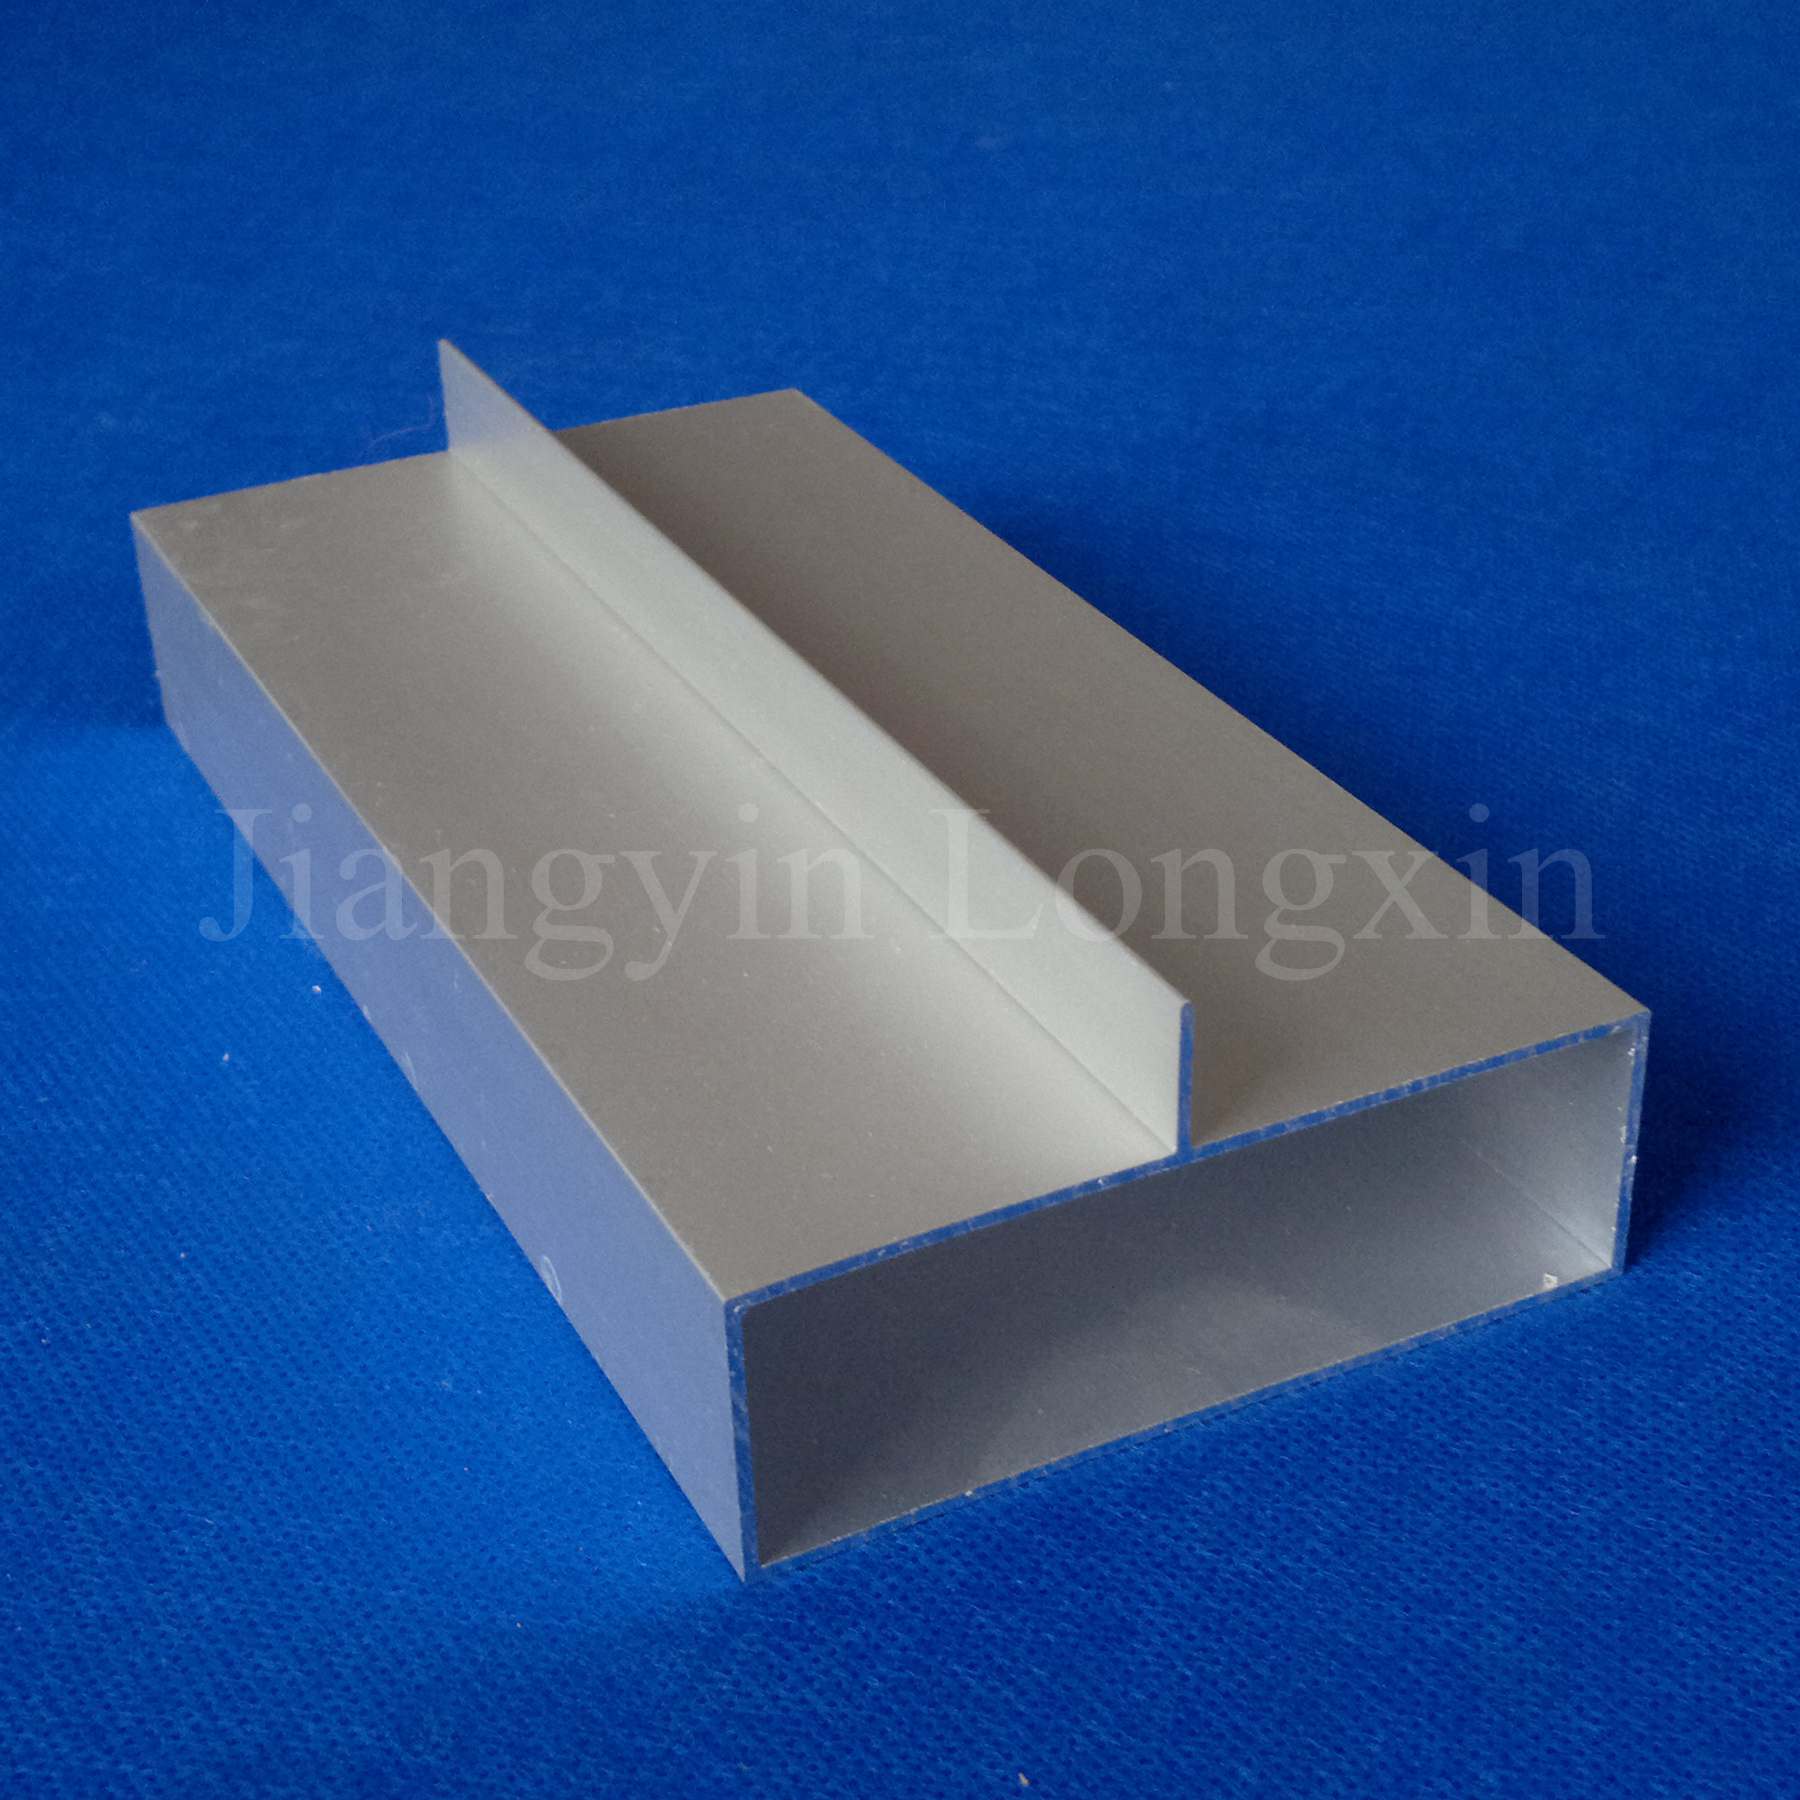 Silver Matt Aluminium Profile for Construction